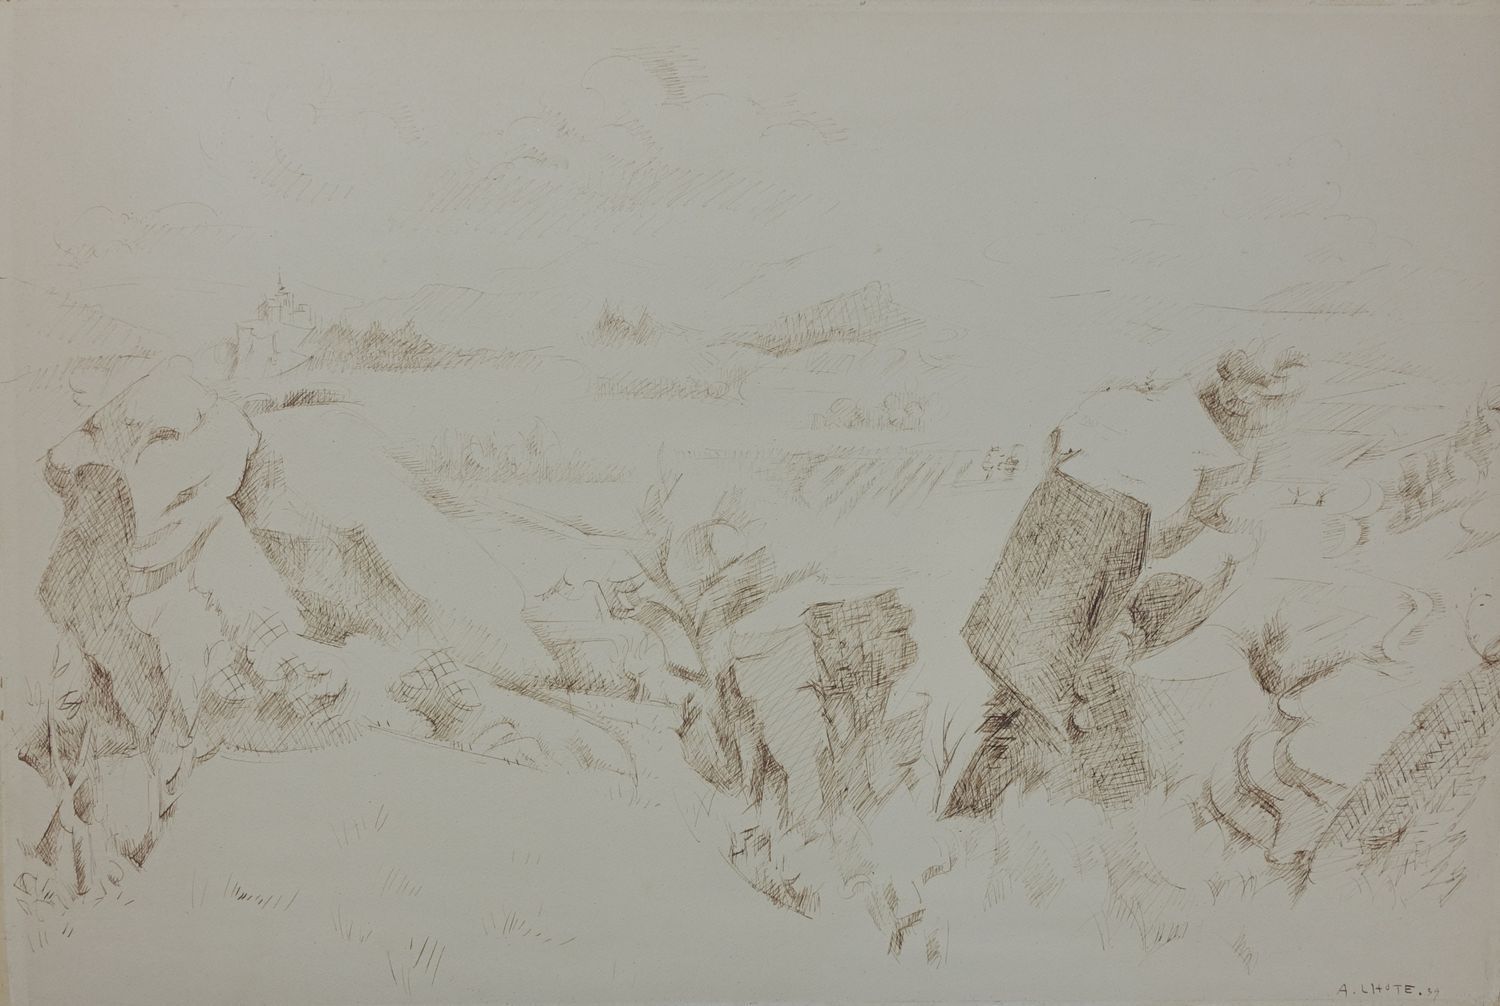 André LHOTE 安德烈-洛特(1885-1962)

普罗旺斯：米尔曼德附近的风景，1939年

棕色墨水原画

右下方有签名

日期(19)39

在&hellip;